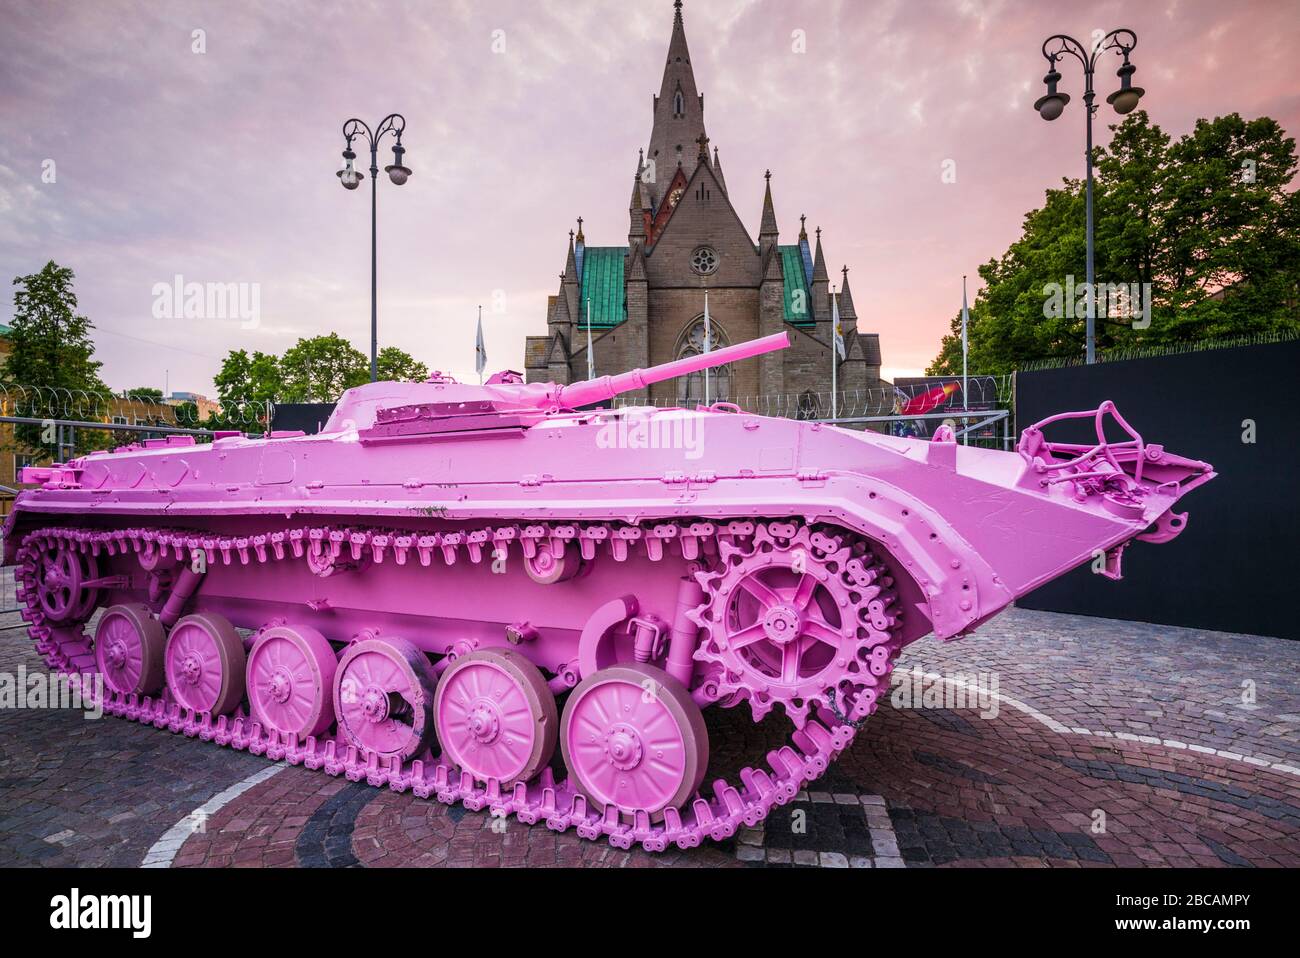 https://c8.alamy.com/comp/2BCAMPY/sweden-narke-orebro-pink-tank-former-soviet-bloc-bmp-1-tank-painted-pink-by-czech-artist-david-cerny-as-a-gay-pride-symbol-for-the-orebro-open-ar-2BCAMPY.jpg